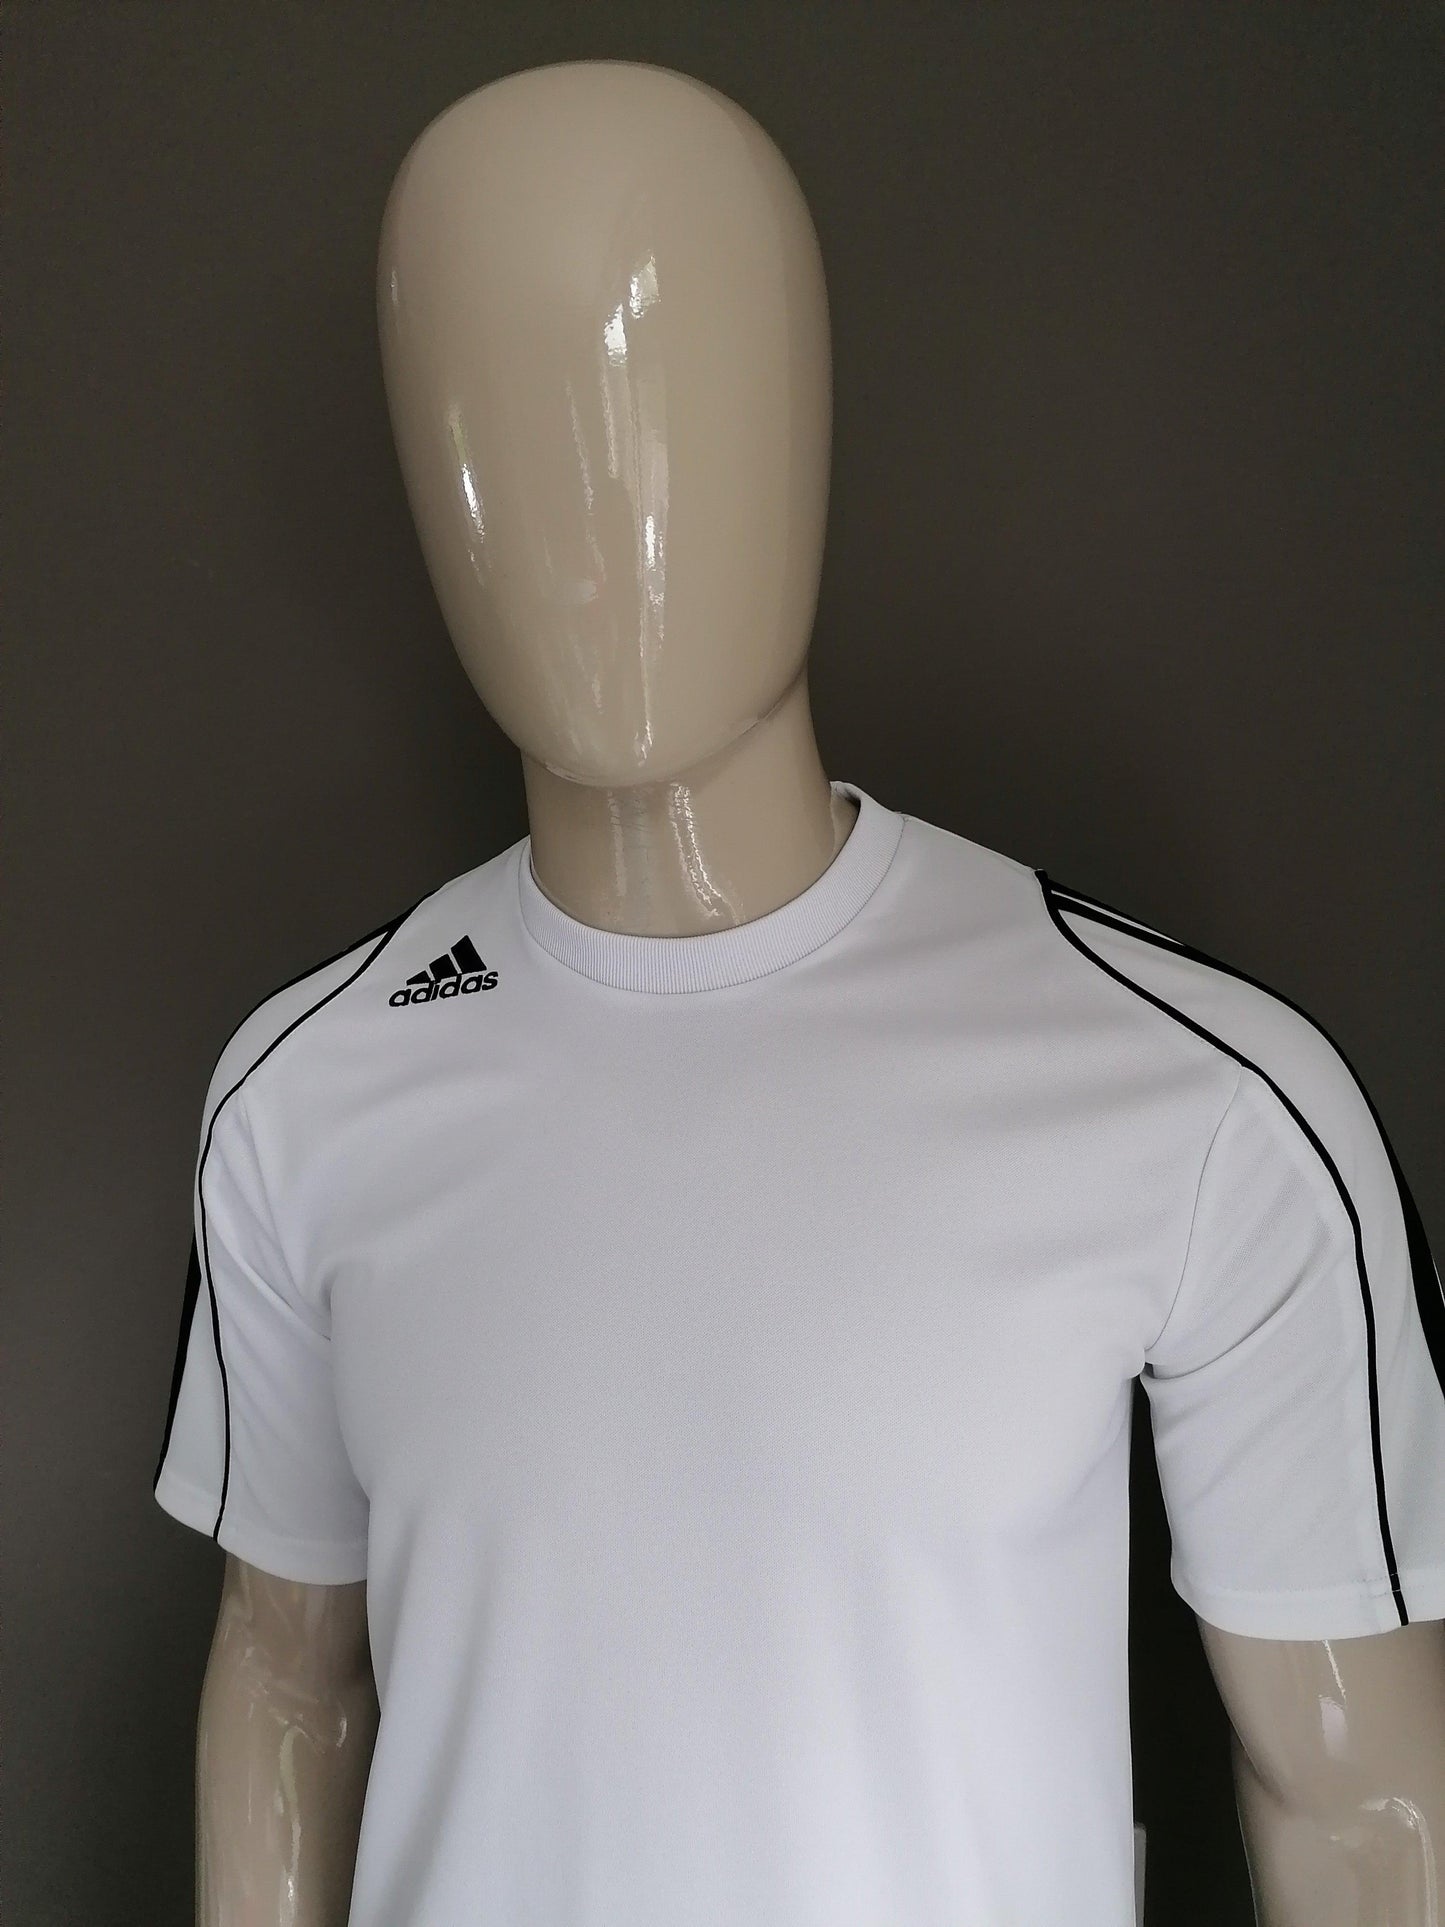 Adidas sport shirt. Zwart Wit gekleurd. Maat S - EcoGents